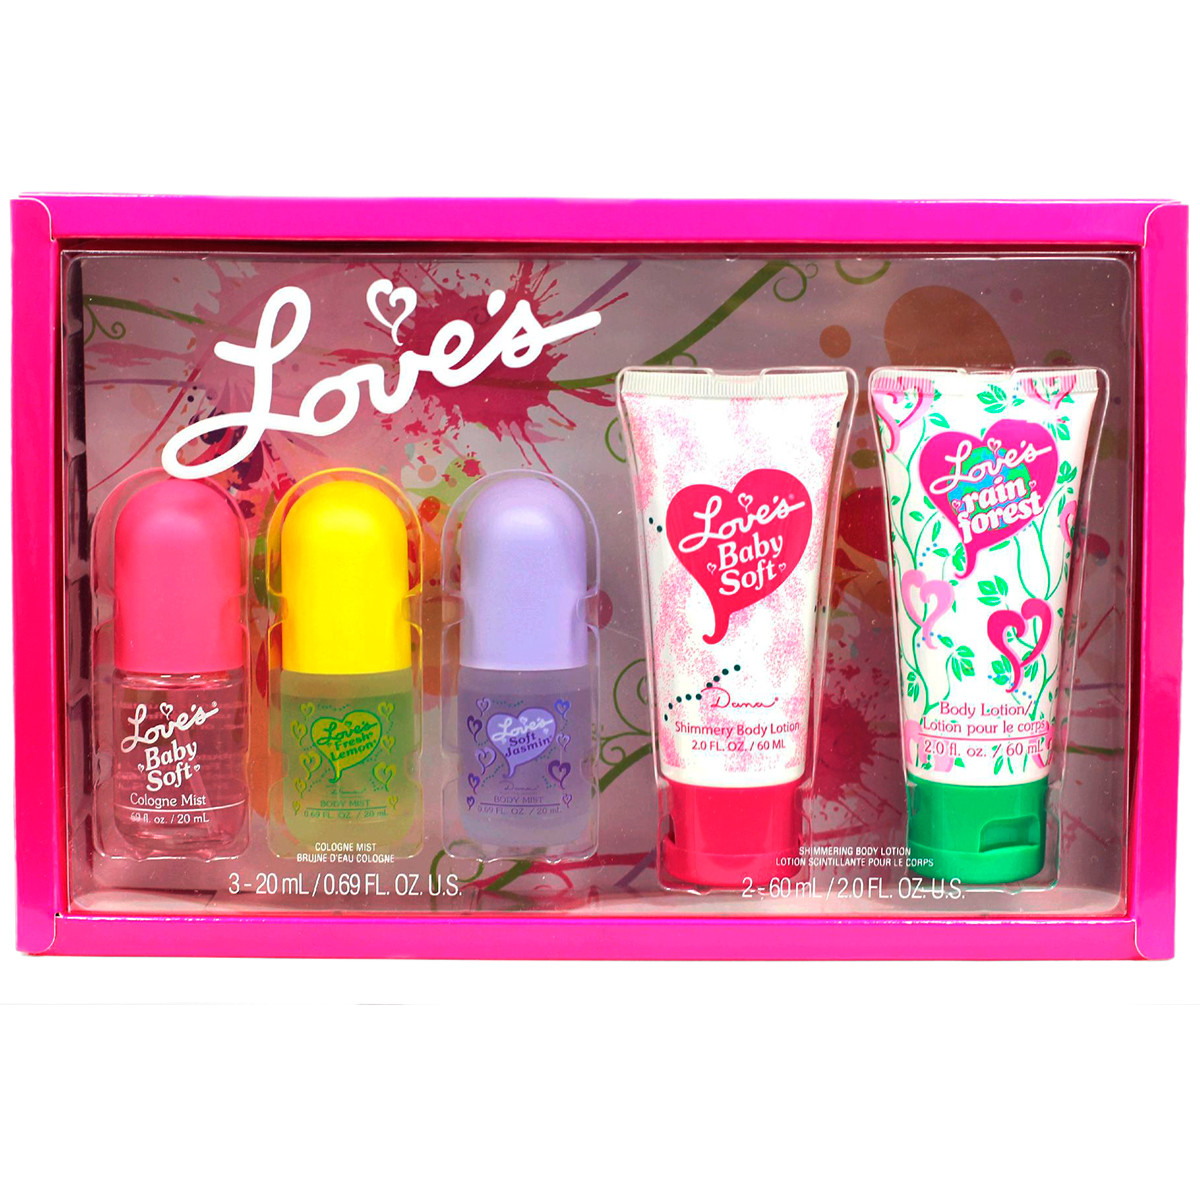 Loves Baby Soft Perfume Gift Sets
 5pc Dana Loves Baby Soft Gift Box Set Cologne Lotion Lemon